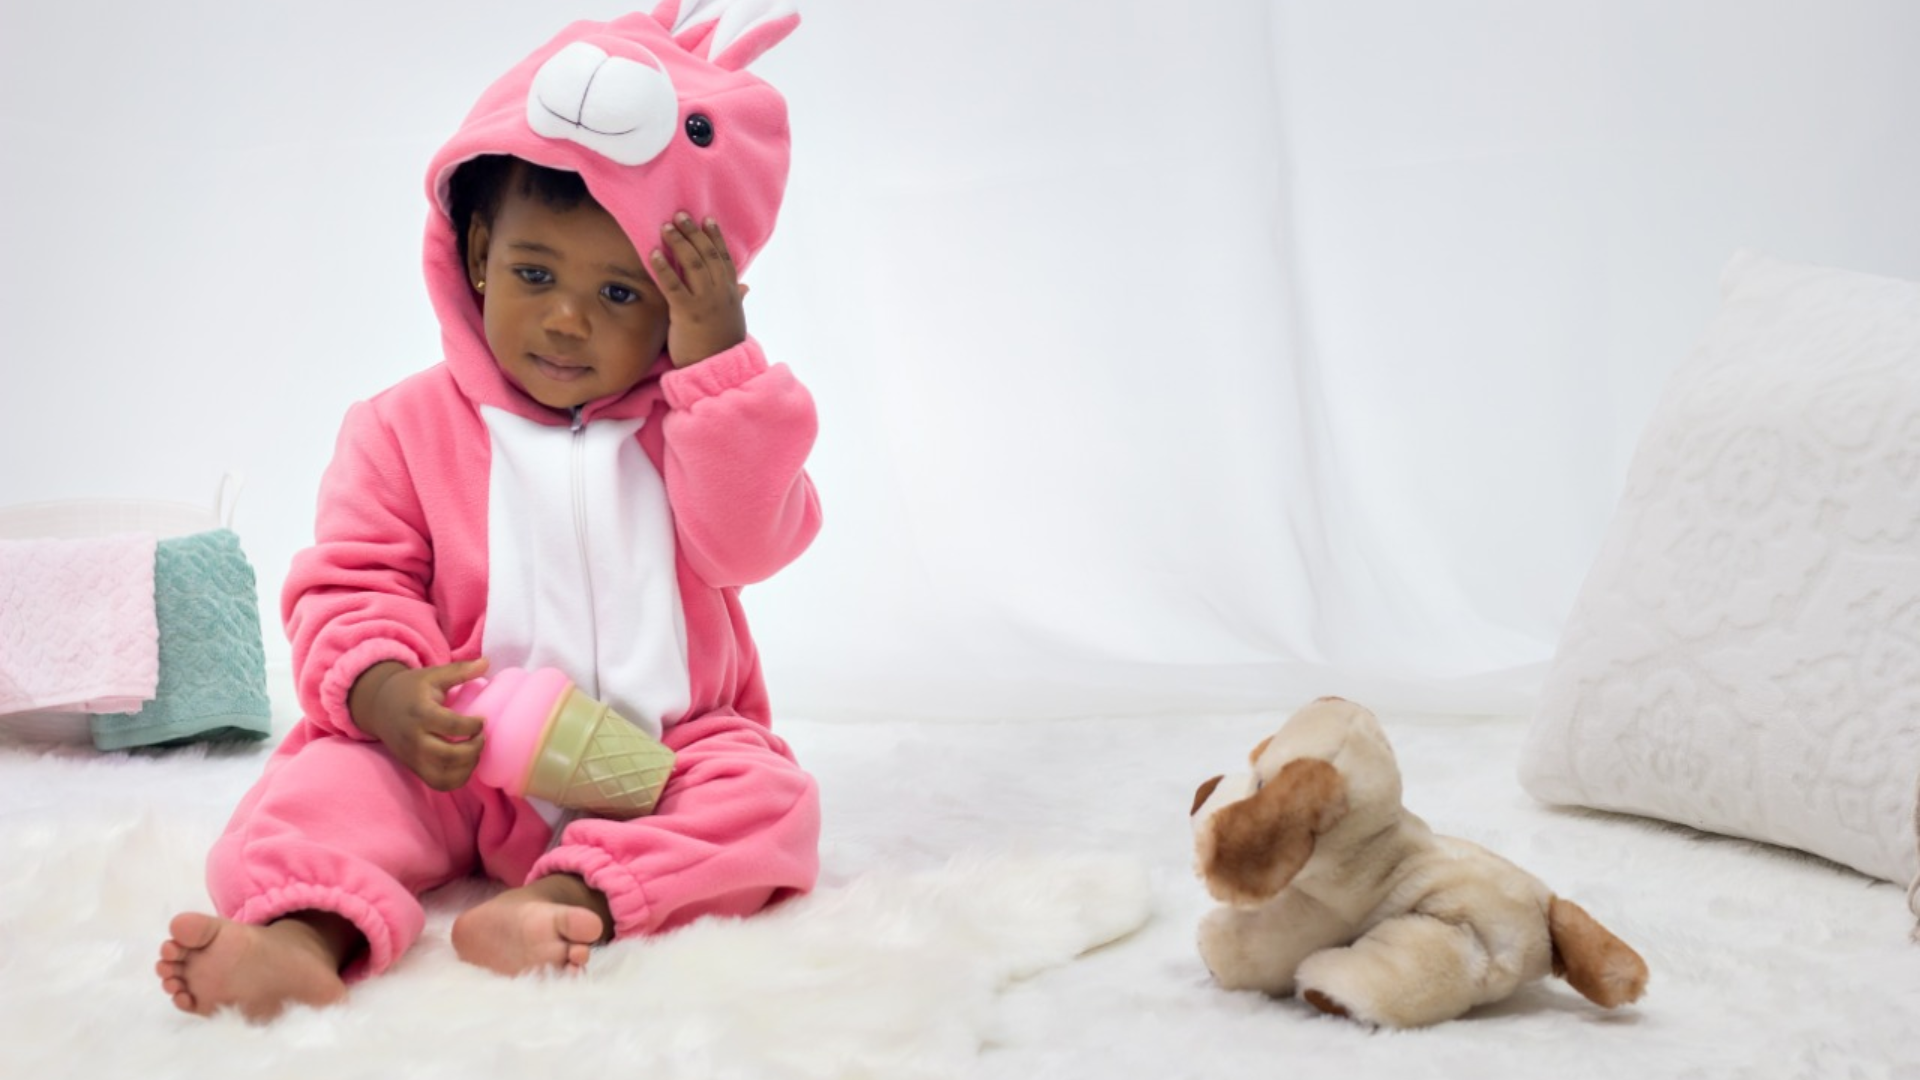 Macacão Pijama Kigurumi Infantil Bebê Baby Bichinho: Gatinho (Rosa